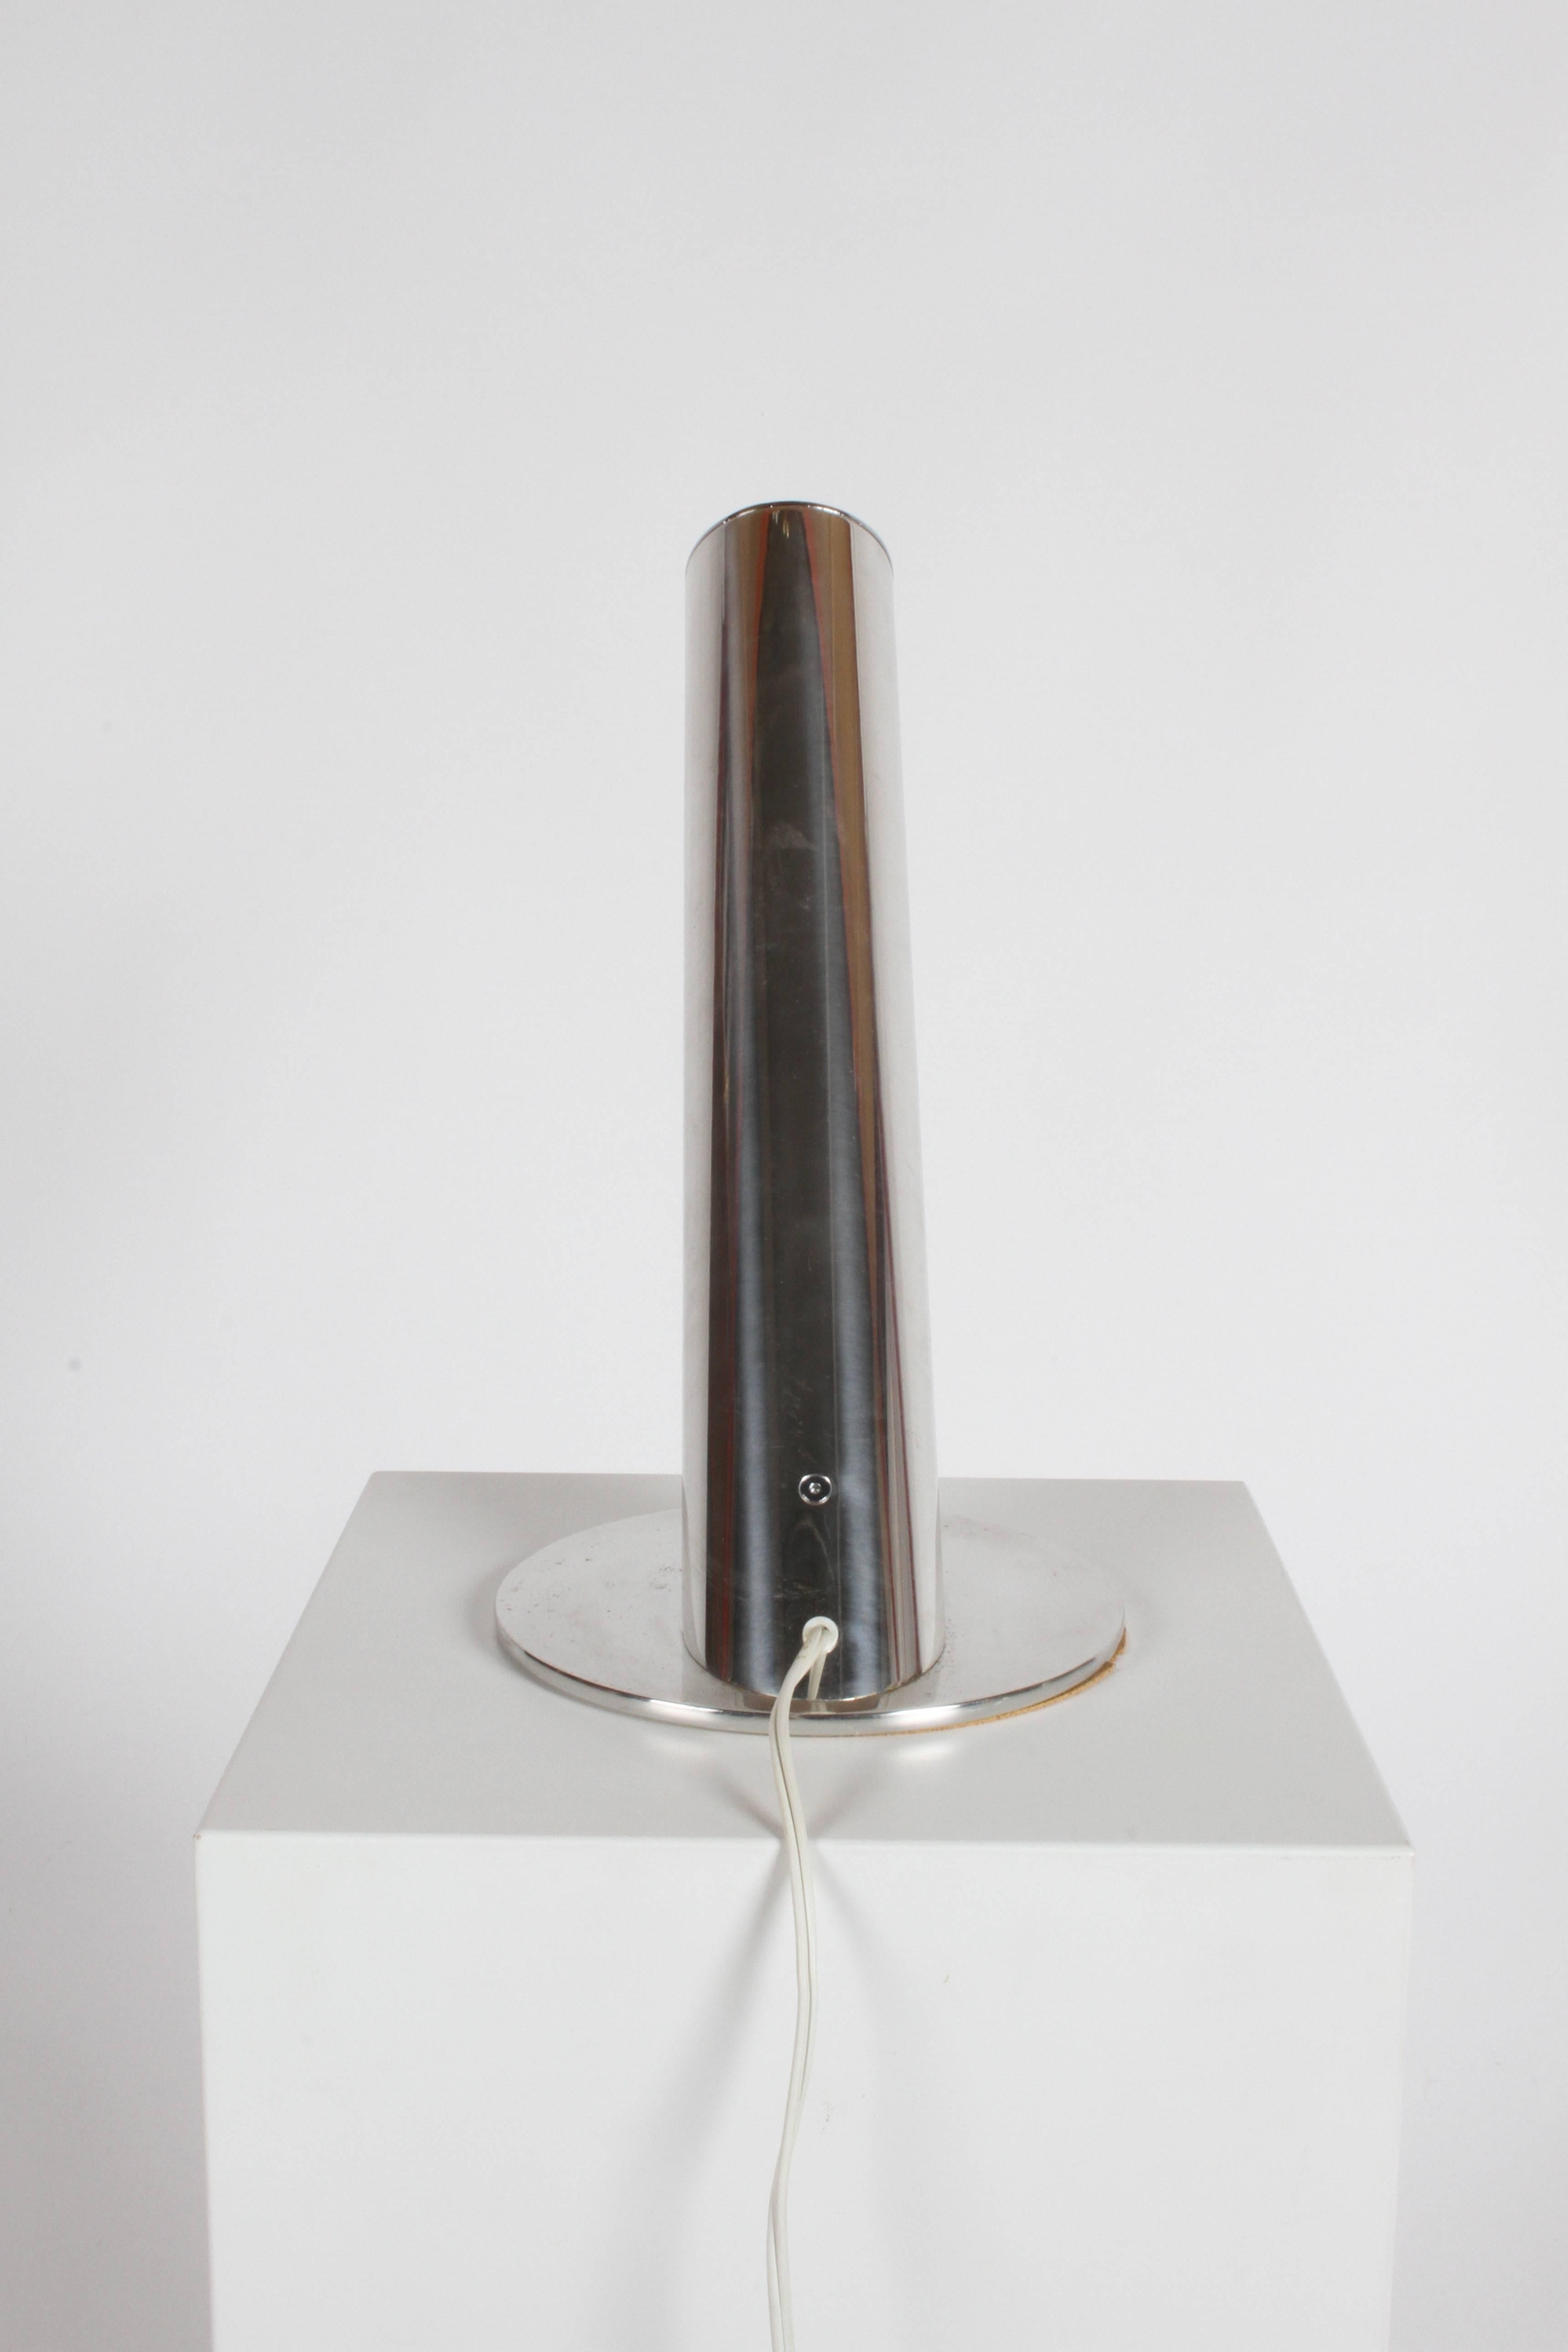 Paul Mayen for Habitat Polished Aluminum Cylinder Lamp For Sale 1